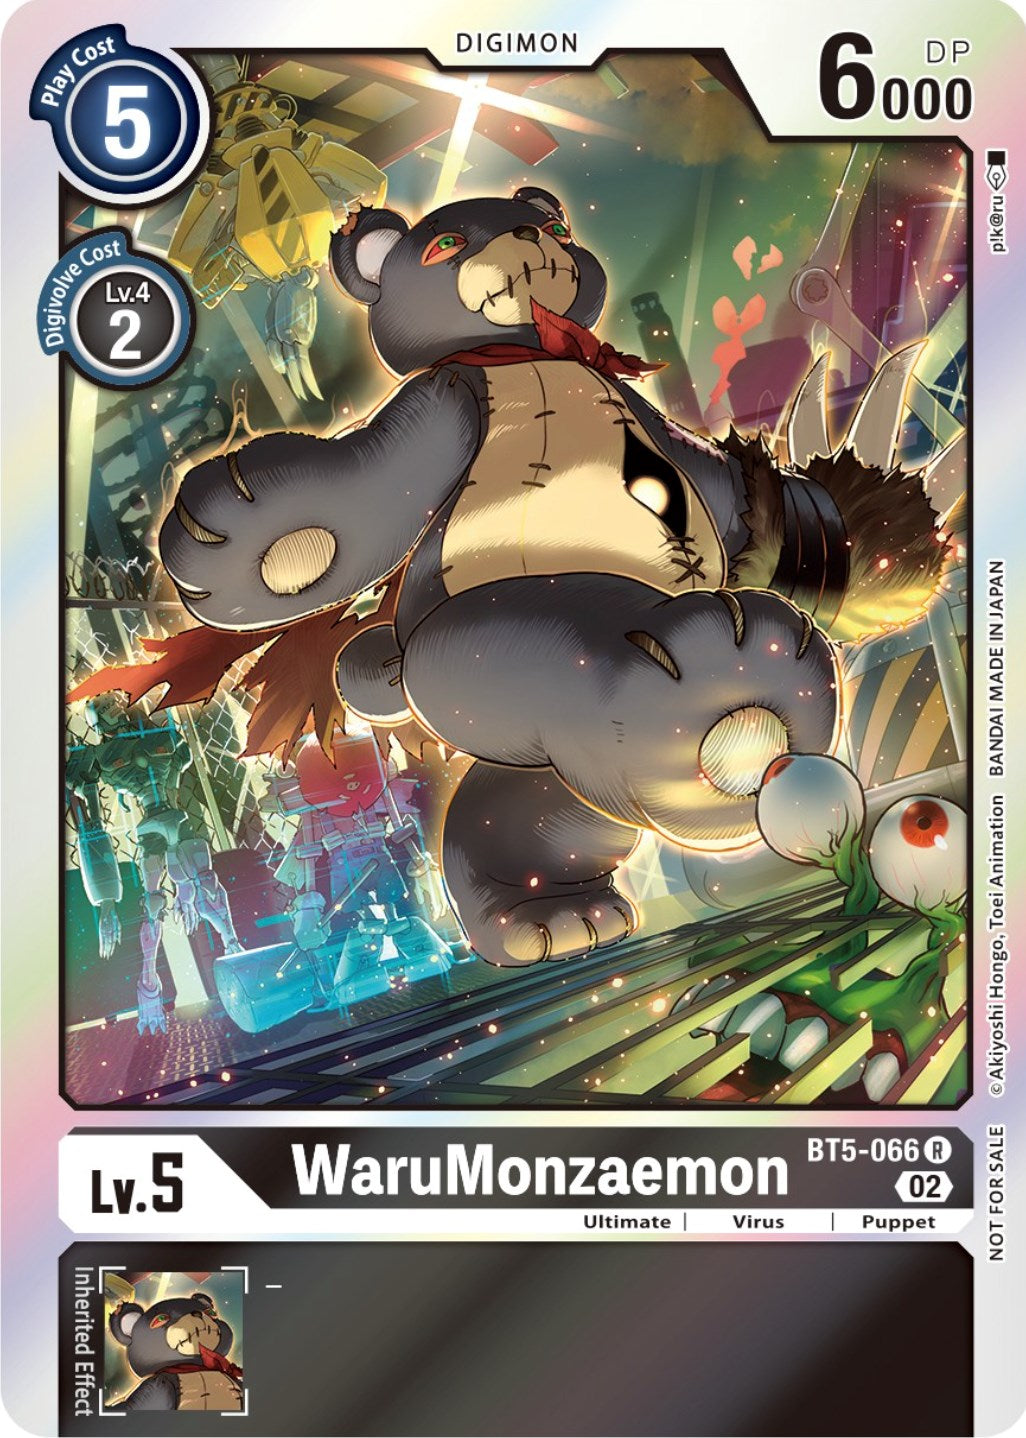 WaruMonzaemon [BT5-066] (Official Tournament Pack Vol. 7) [Battle of Omni Promos] | The Time Vault CA